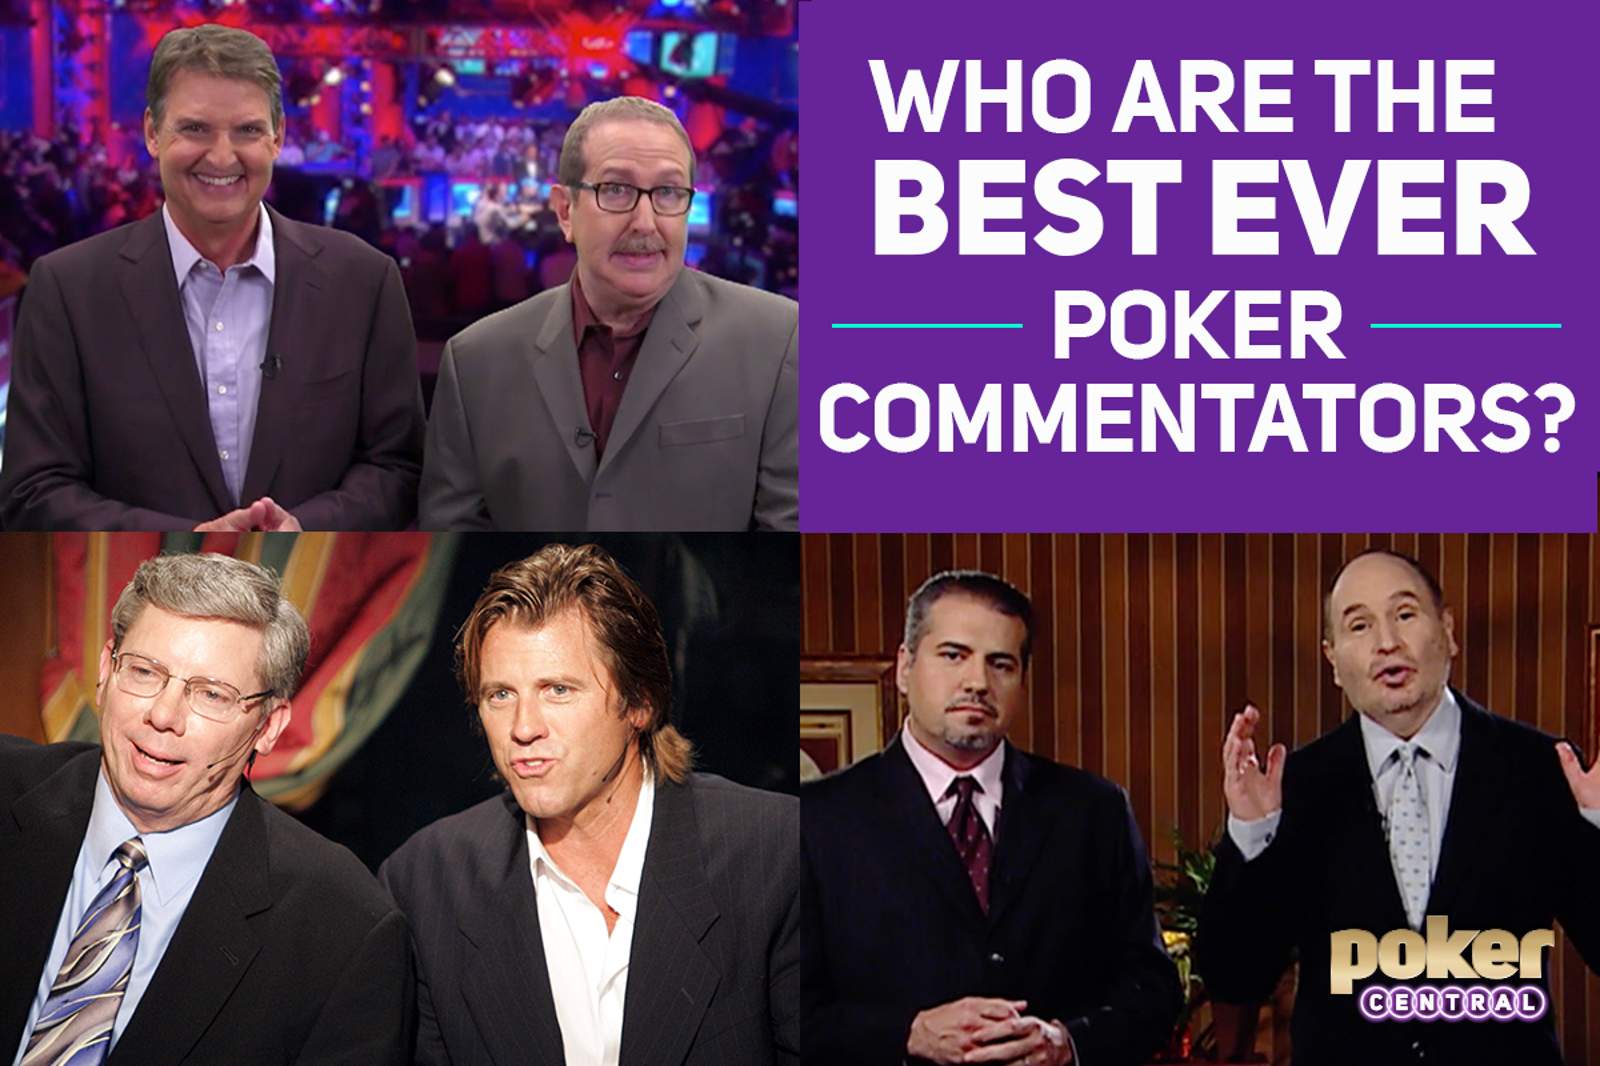 The Best Ever Poker Commentators